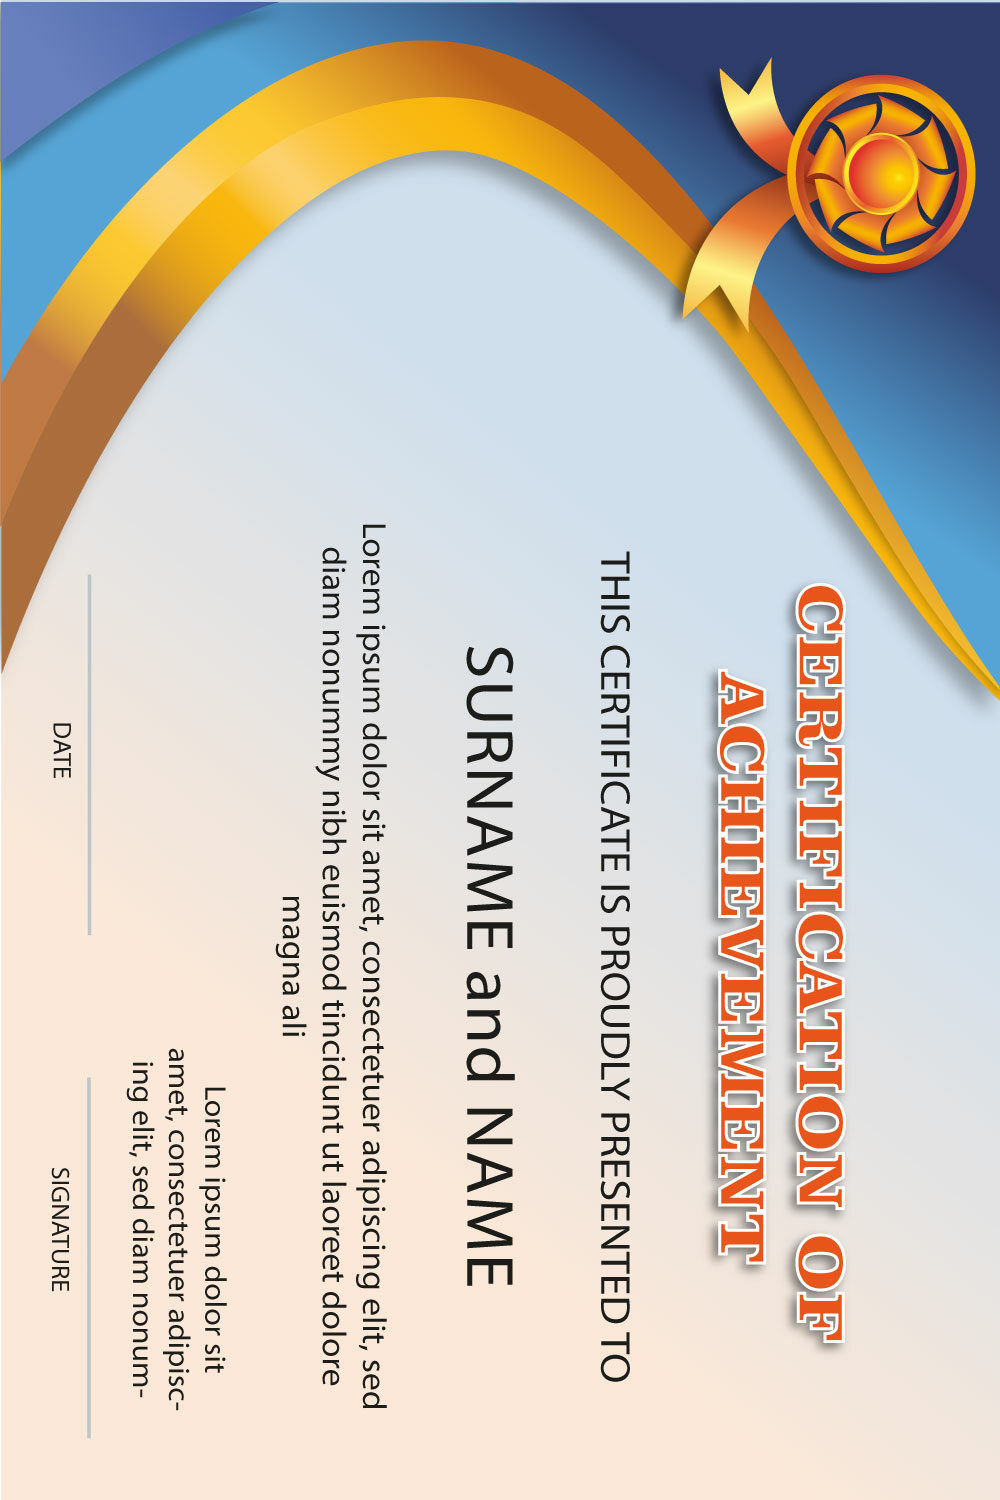 Certification of Achievement Design pinterest image.